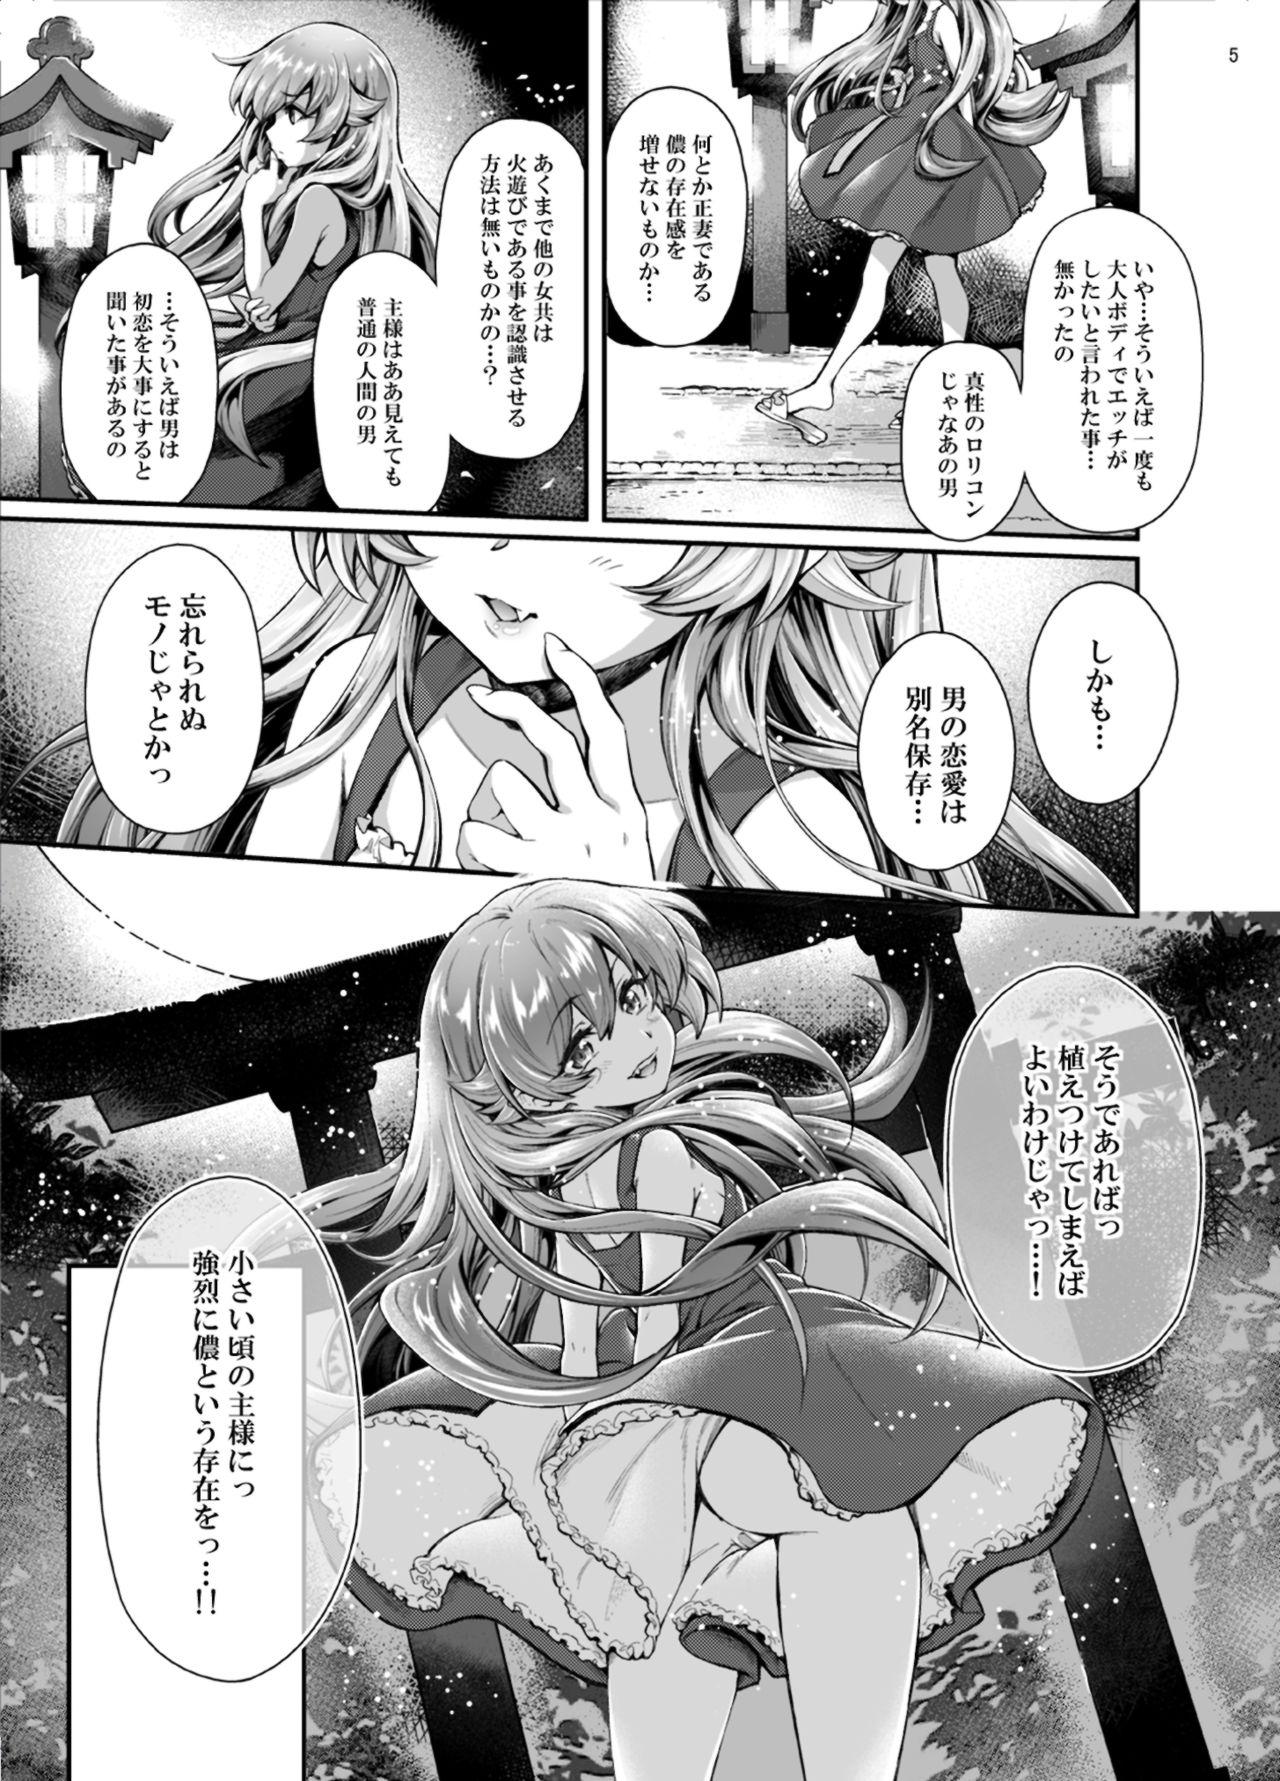 Furry Pachimonogatari Part 17: Shinobu Drama - Bakemonogatari Czech - Page 5